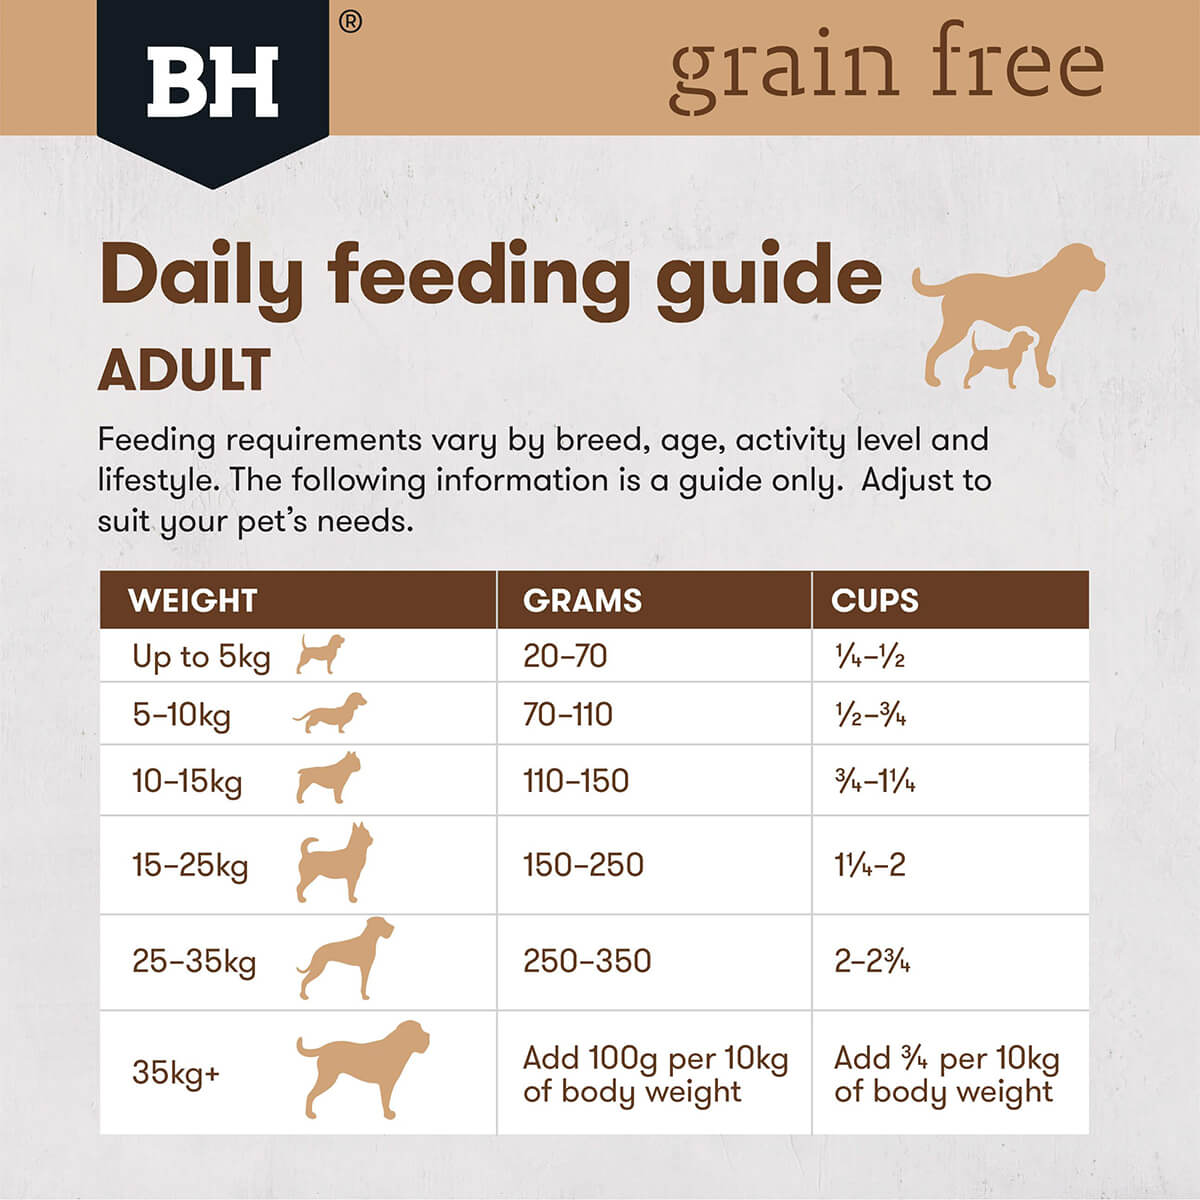 Black Hawk Grain Free Adult Chicken Dry Dog Food (122713000028) [default_color]